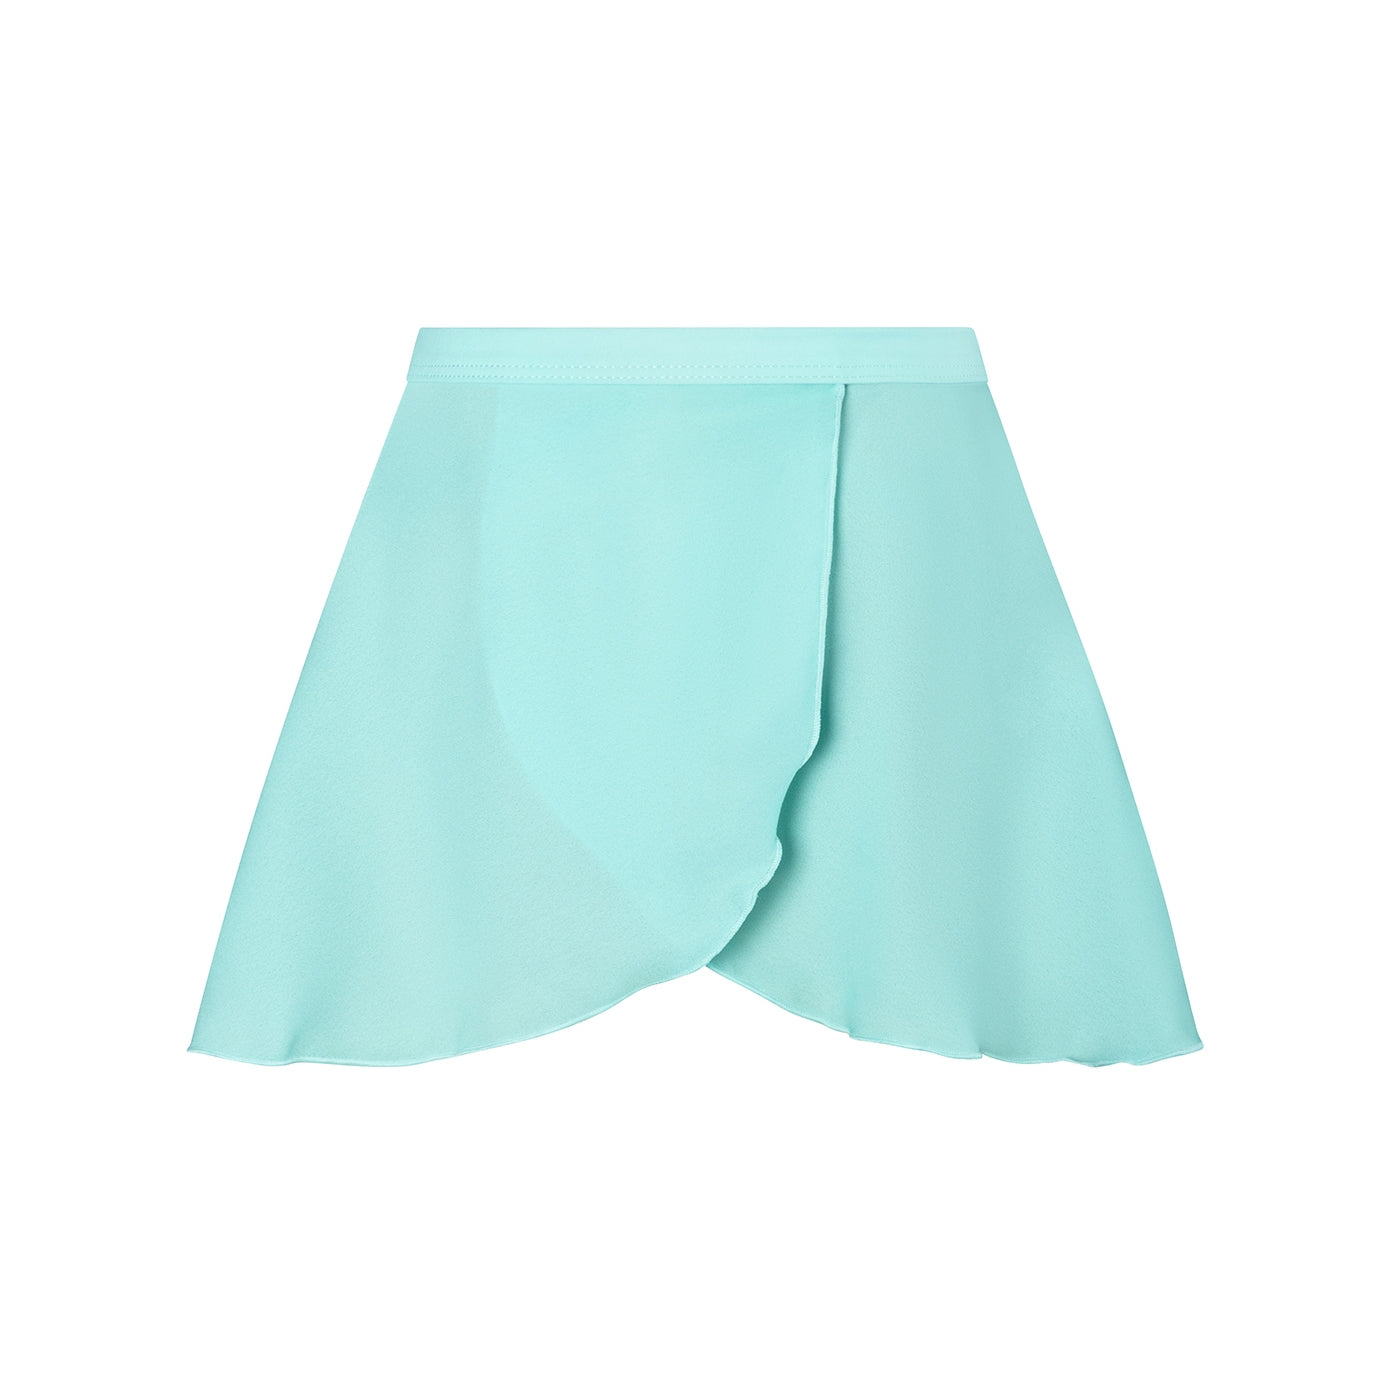 Energetiks Melody Wrap Skirt (Child sizes XXS, XS & SML) - BEST SELLER!